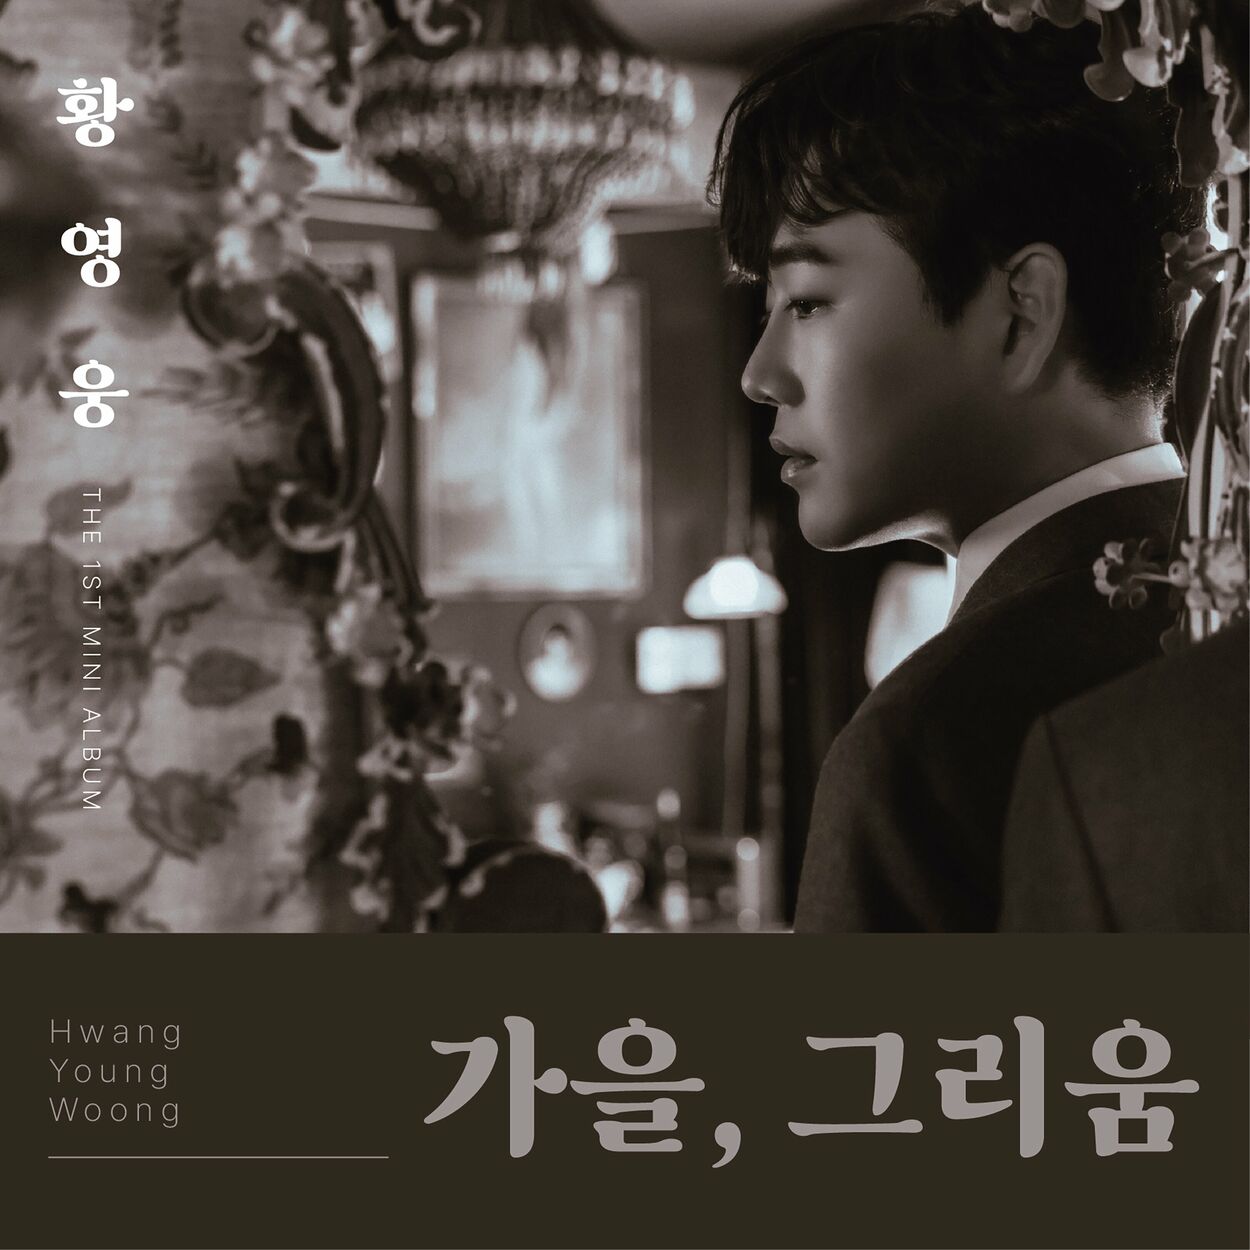 Hwang Young Woong – Fall and yearning